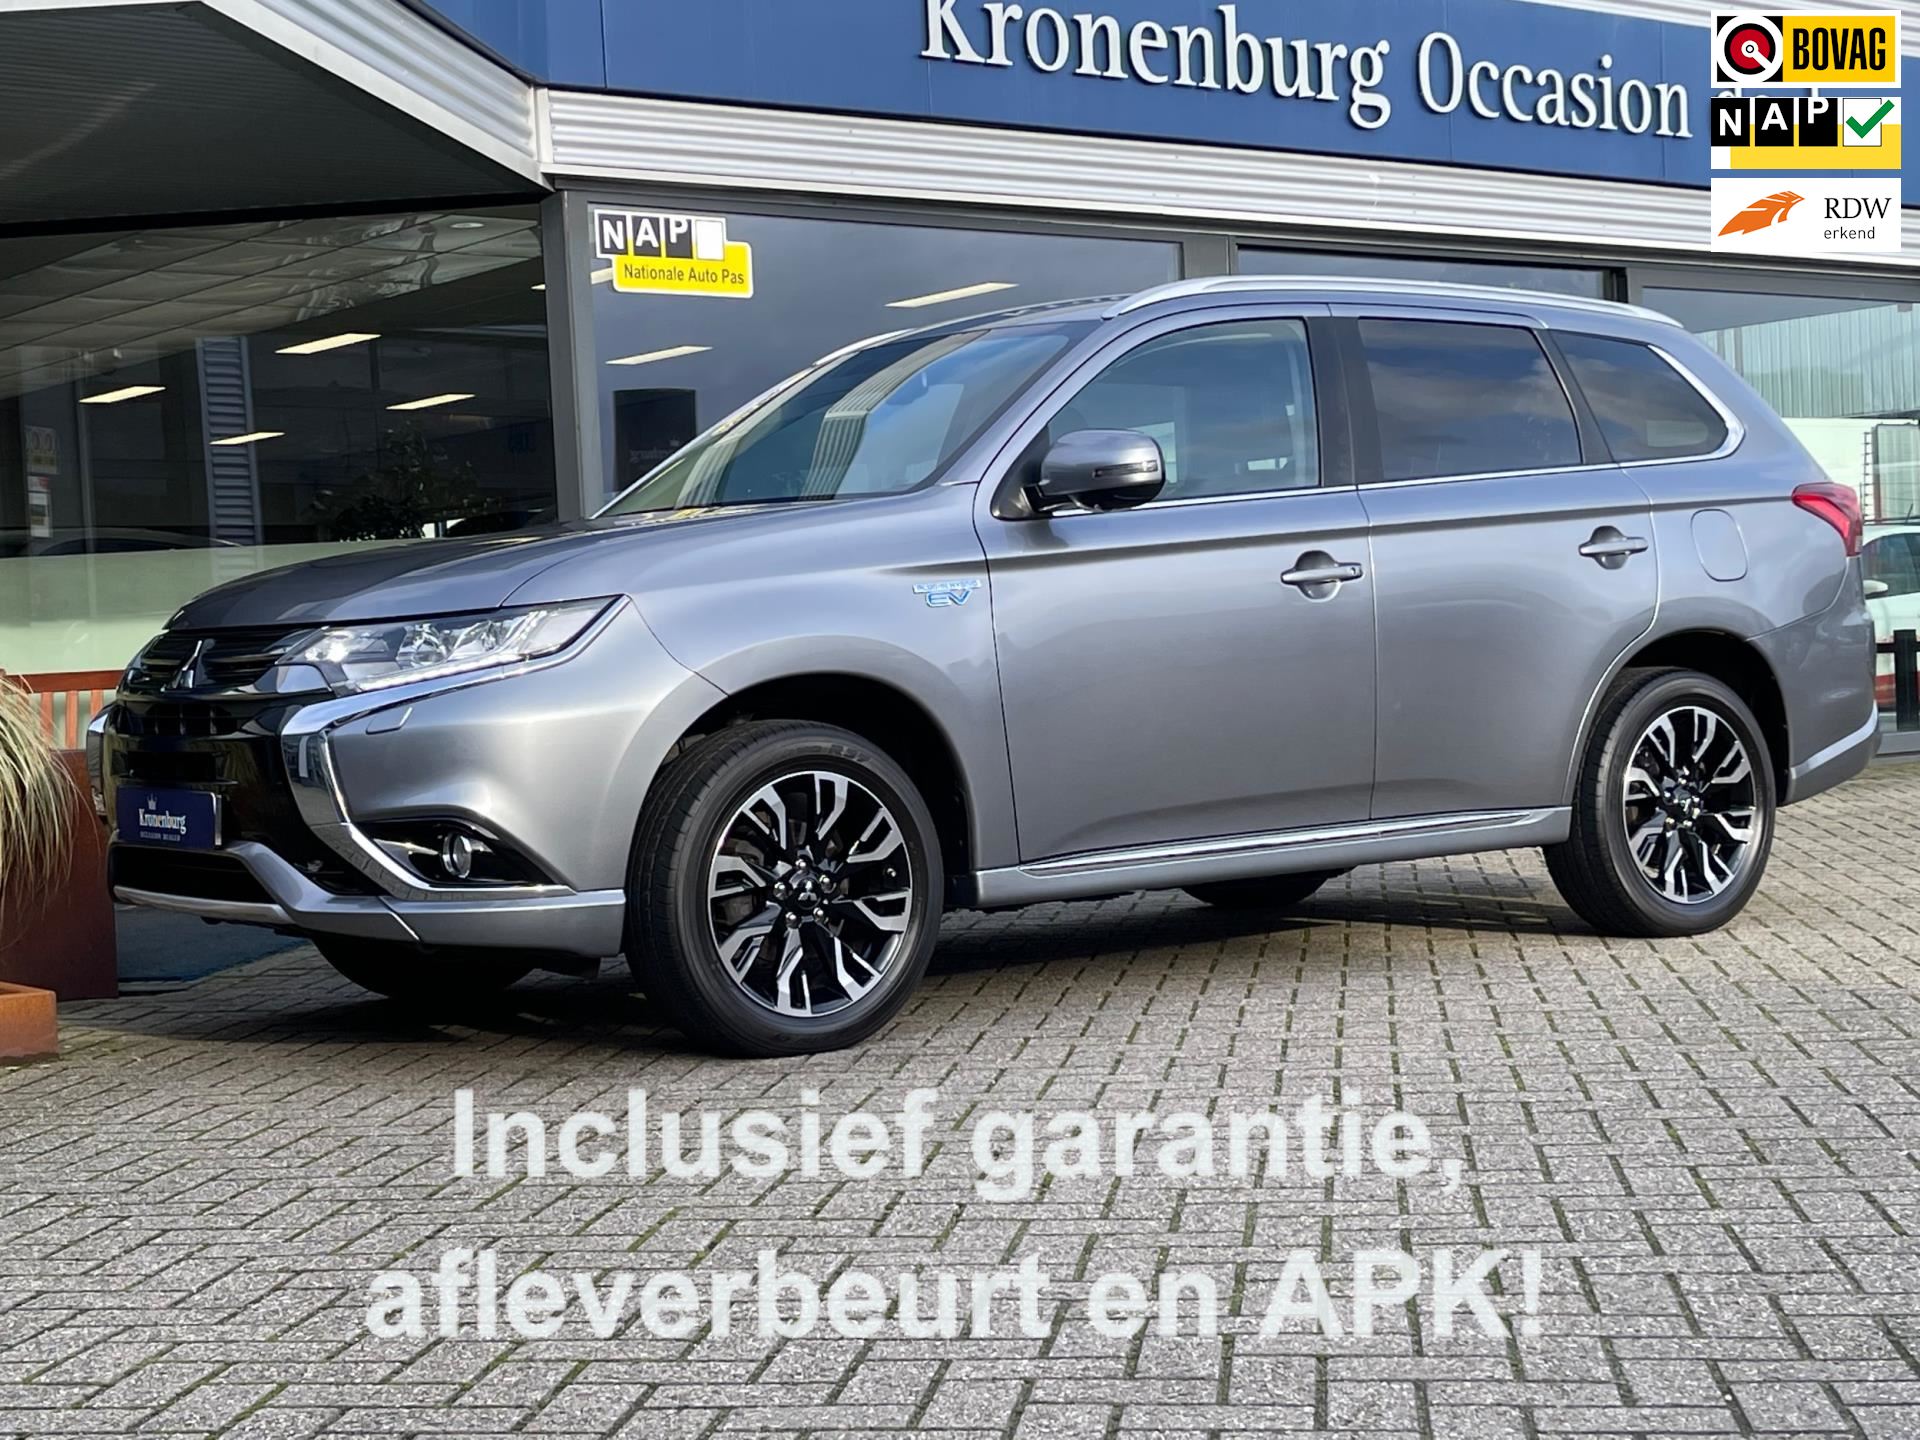 Mitsubishi Outlander occasion - Kronenburg